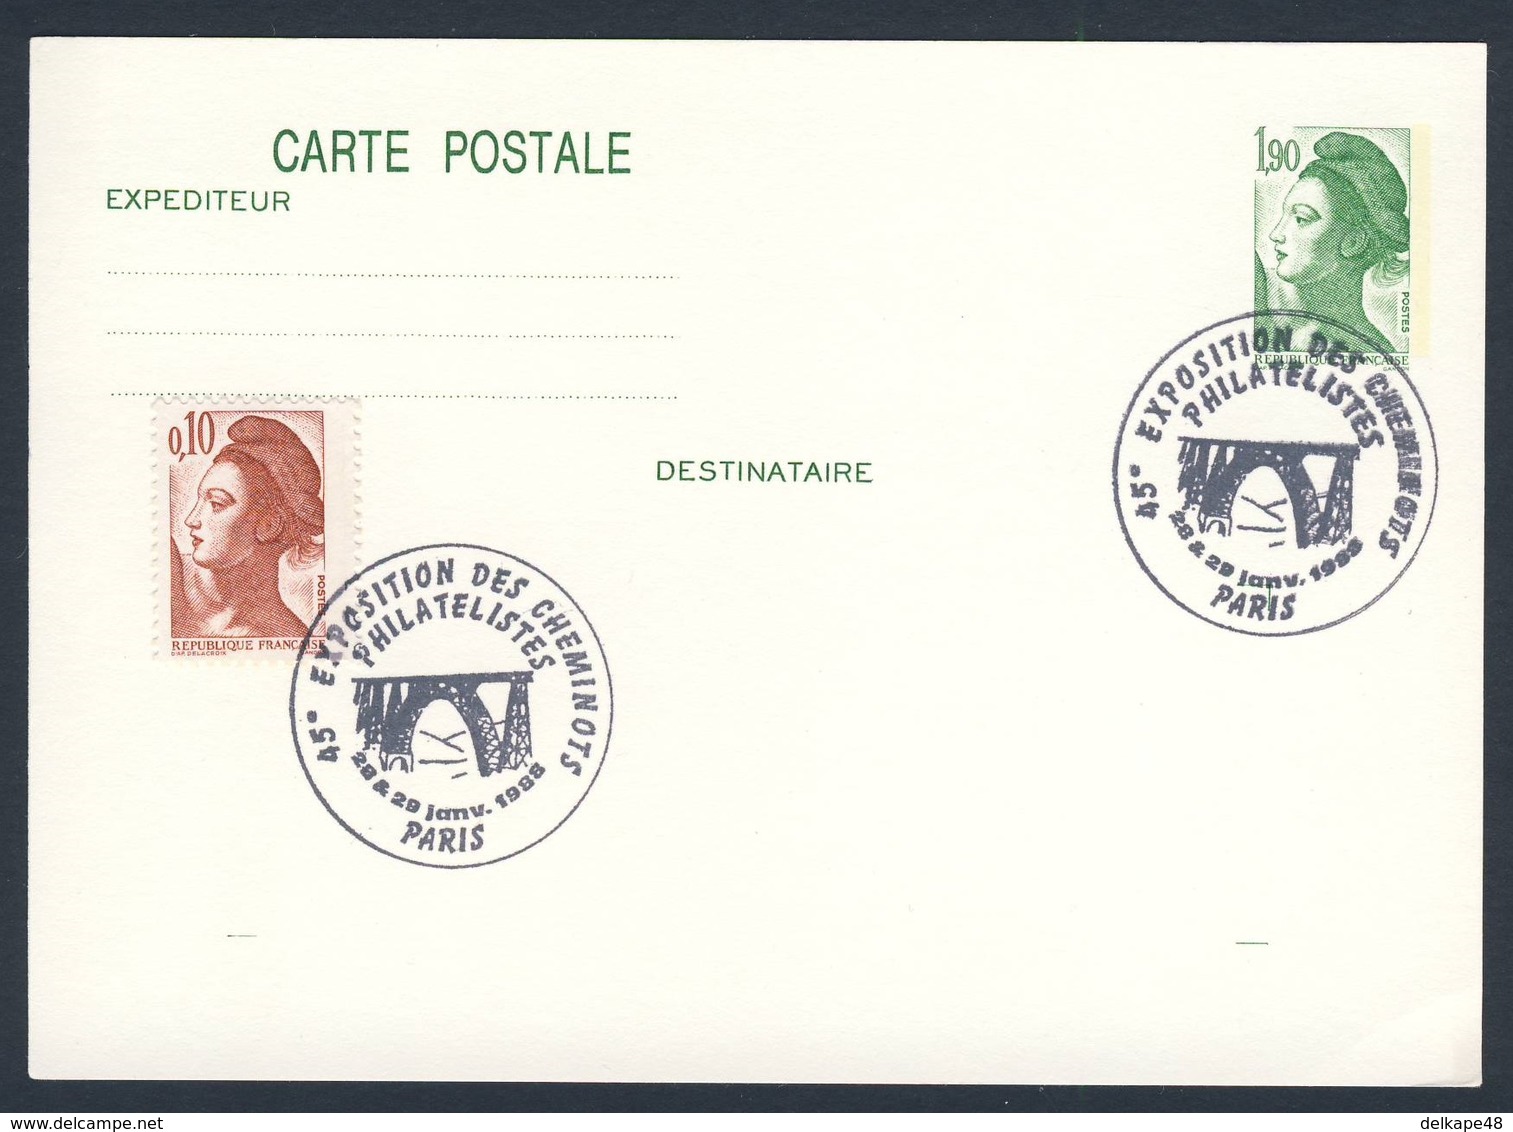 France Rep. Française 1988 Card / Karte / Carte - 45e Exp. Cheminots Philatelistes 1988, Paris / Ausstellung - Treni